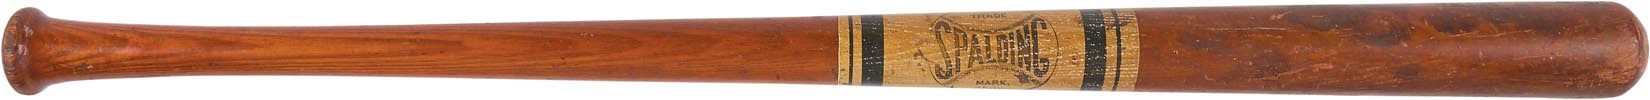 - 1884 Patent Spalding Bat (Samuel M. Chase Collection)